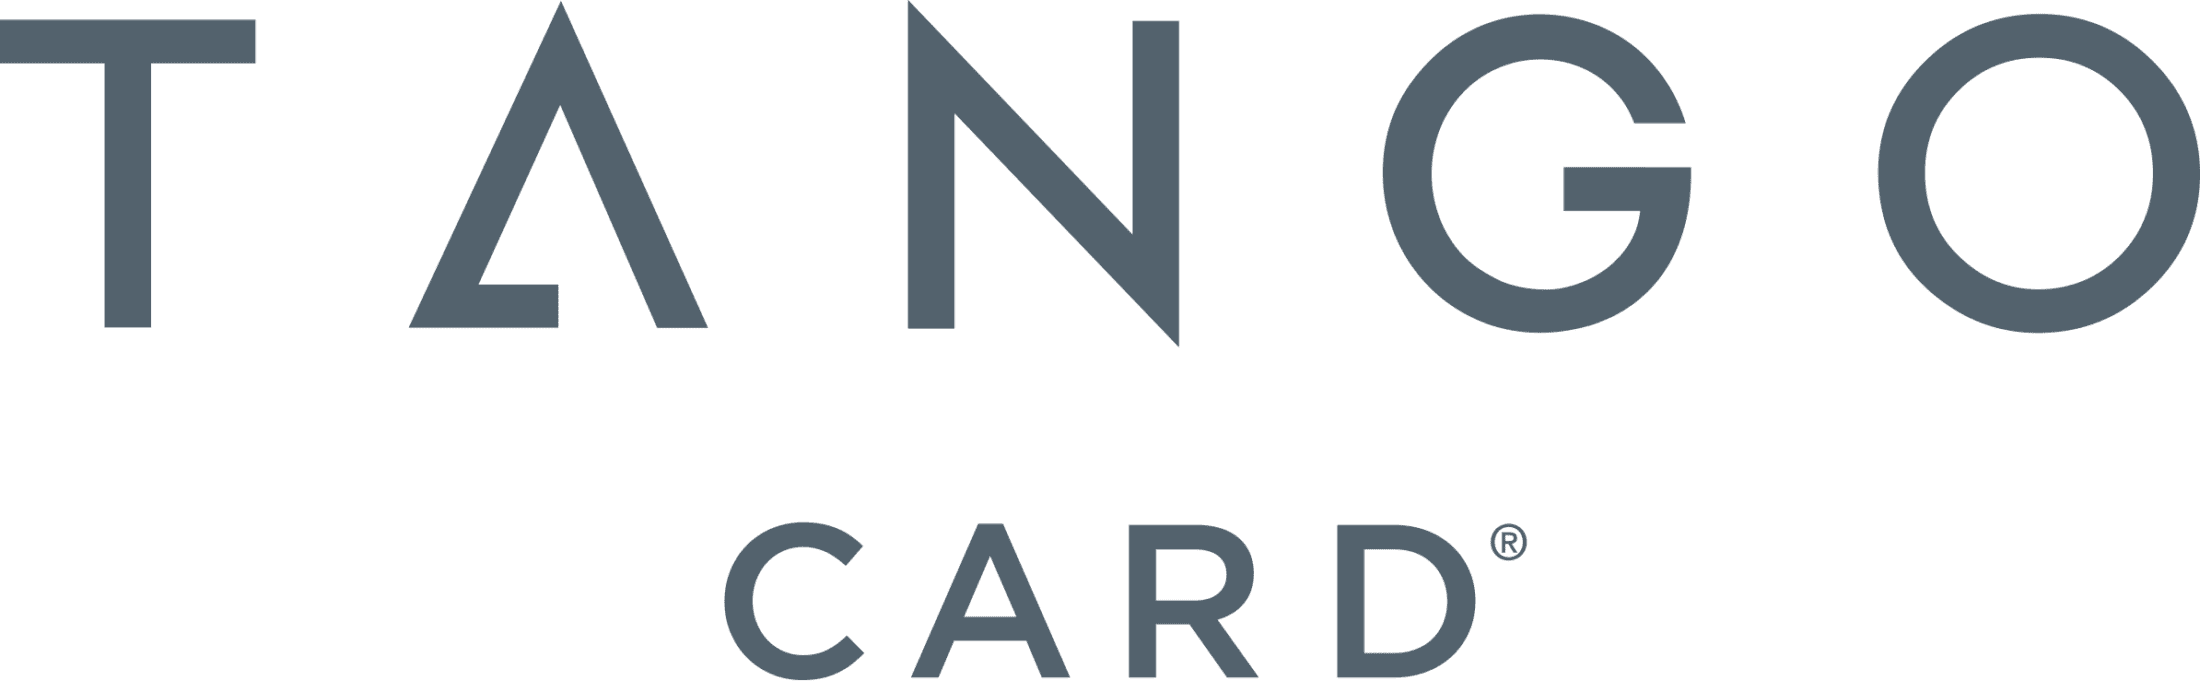 tango card logo trans